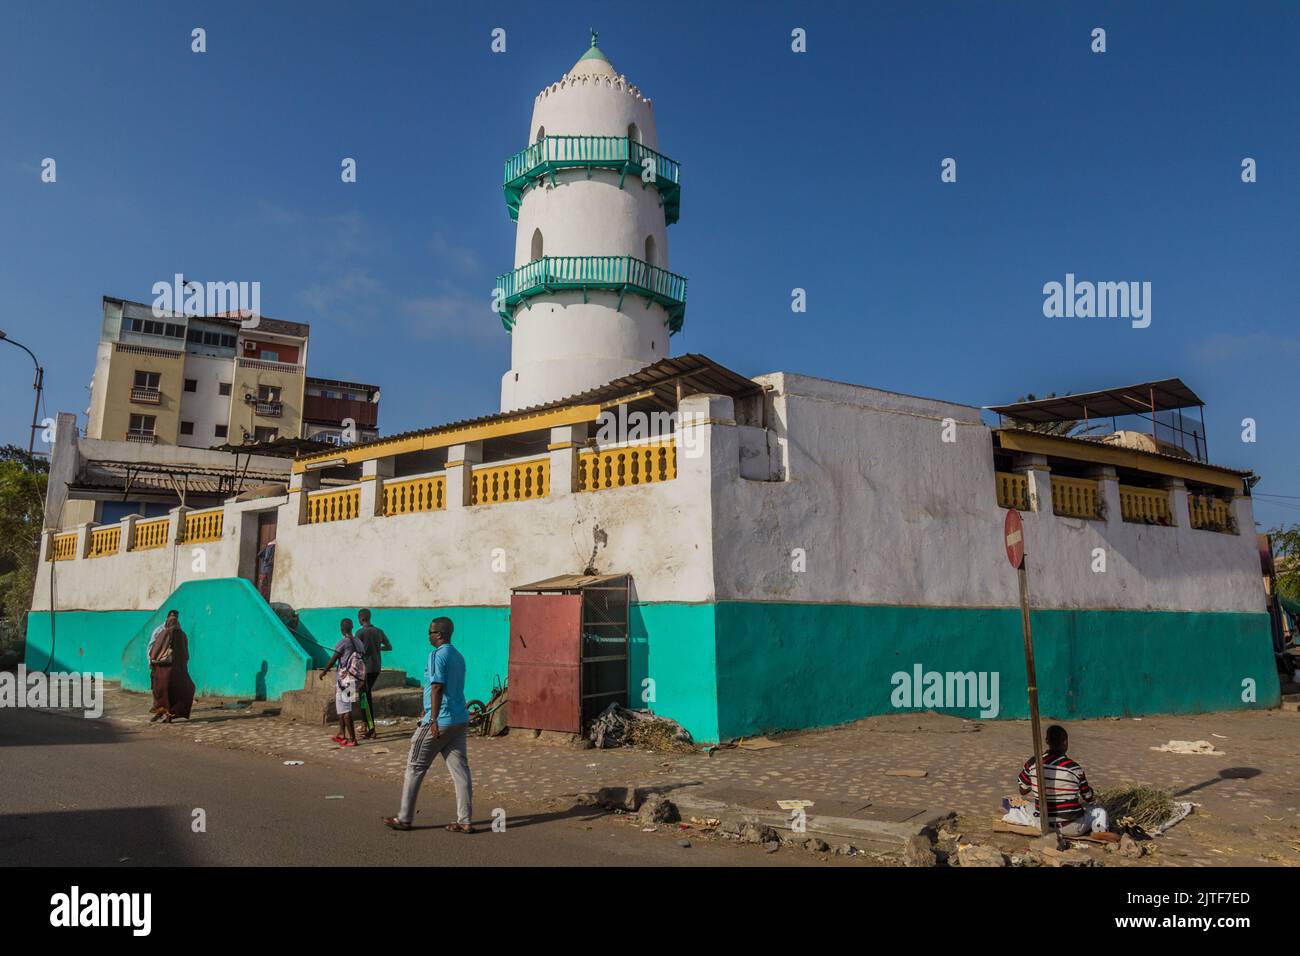 DJIBOUTI, DJIBOUTI - 17 AVRIL 2019 : Mosquée Hamoudi à Djibouti, capitale de Djibouti. Banque D'Images